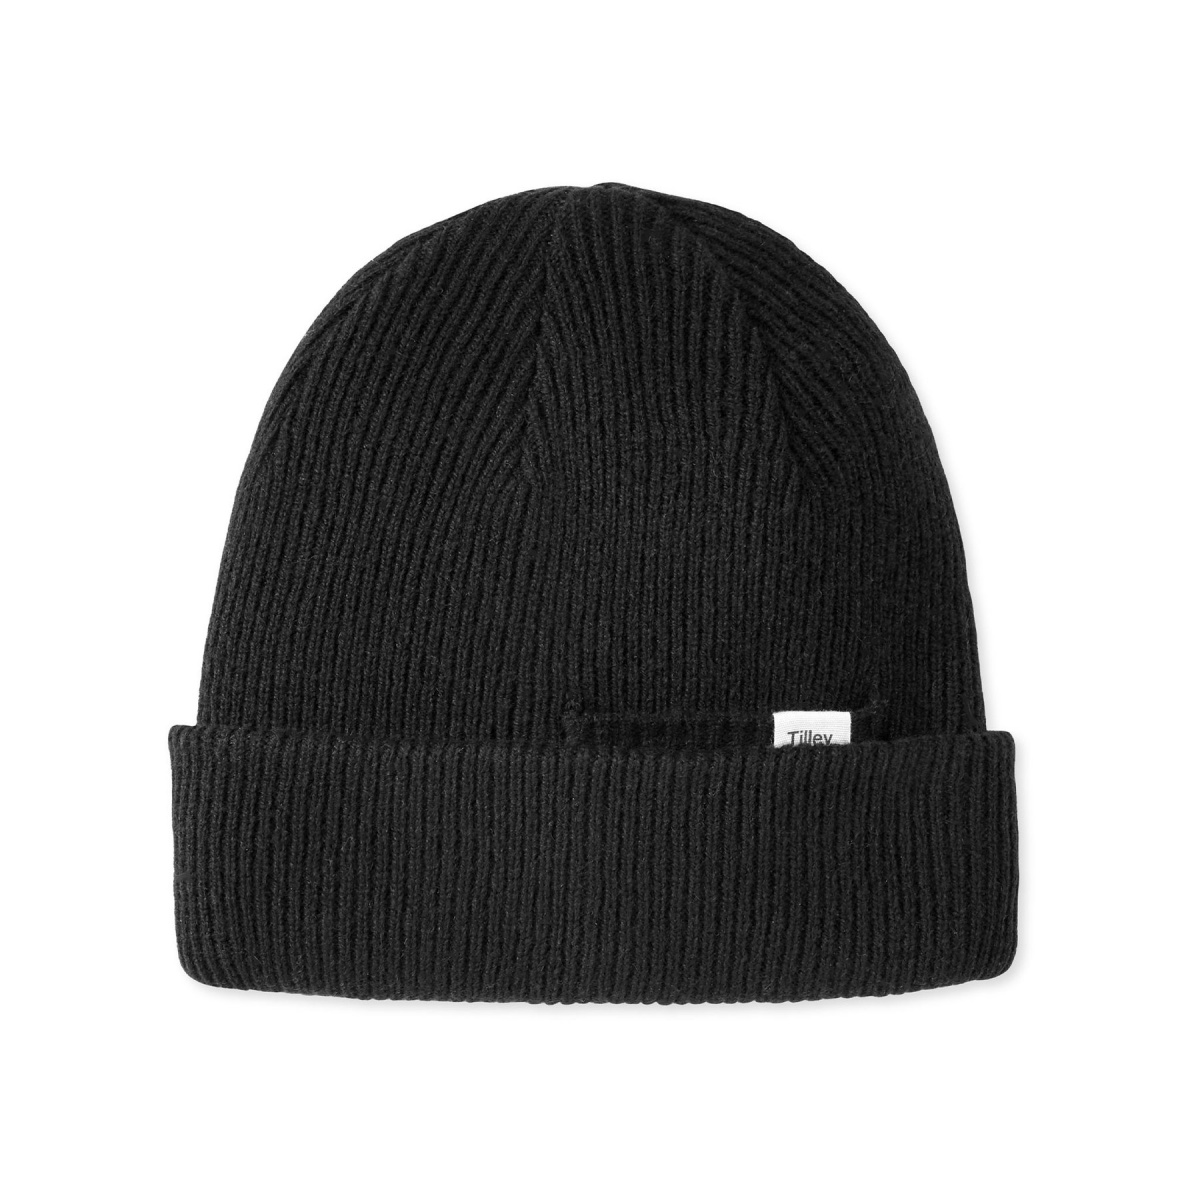 Merino wool hat - Tilley